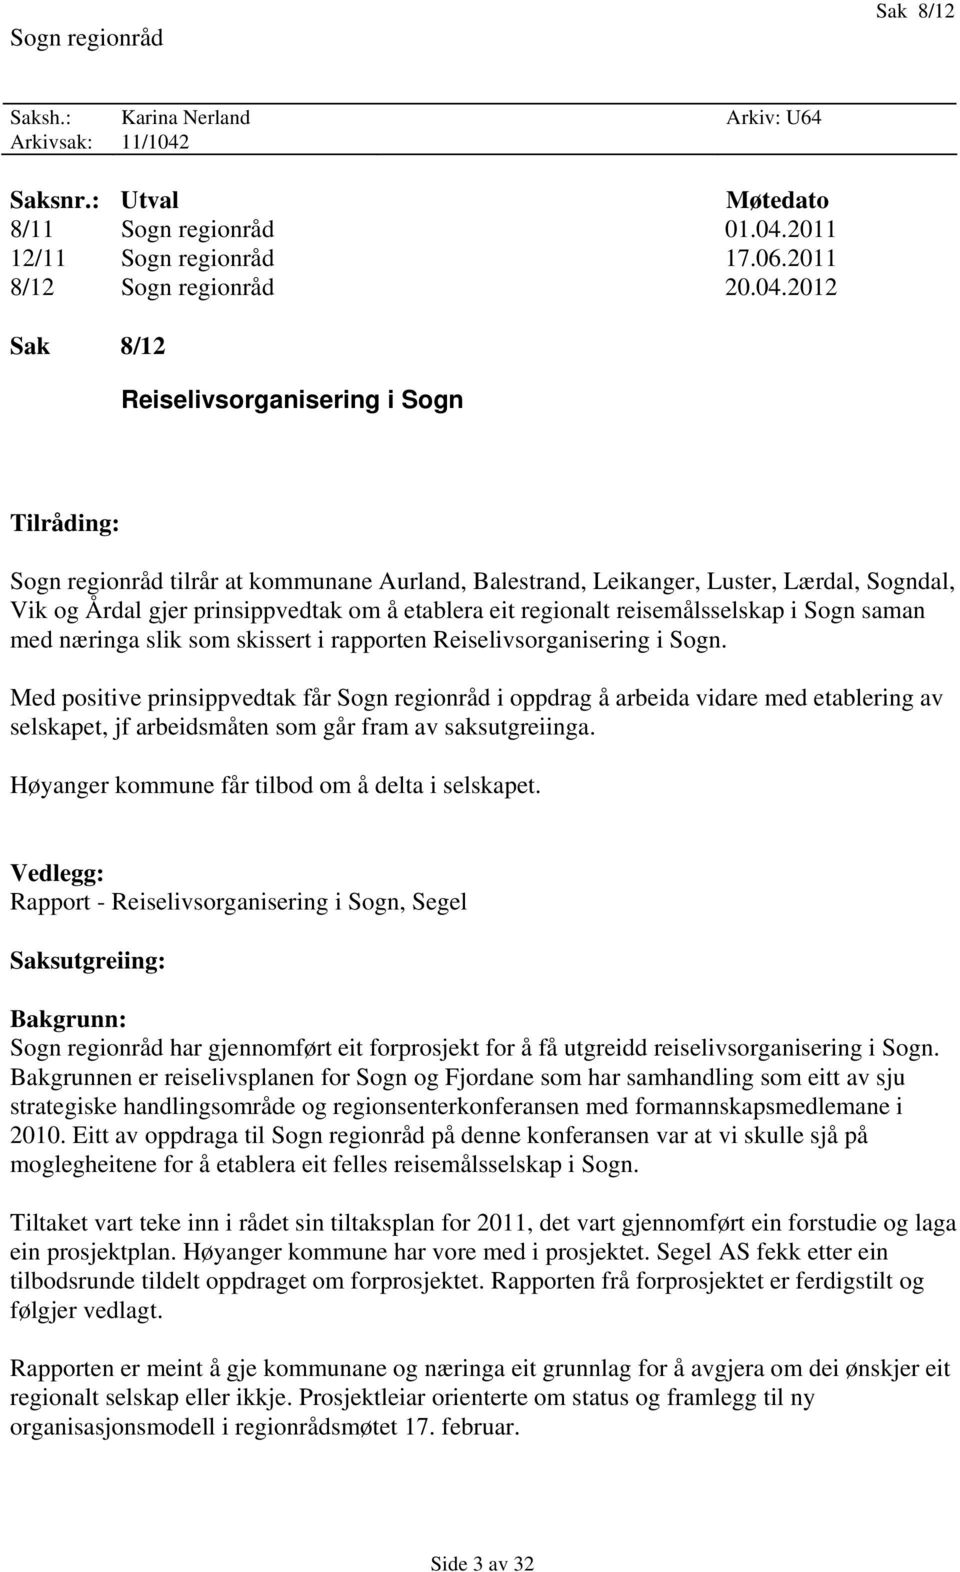 2011 12/11 Sogn regionråd 17.06.2011 8/12 Sogn regionråd 20.04.